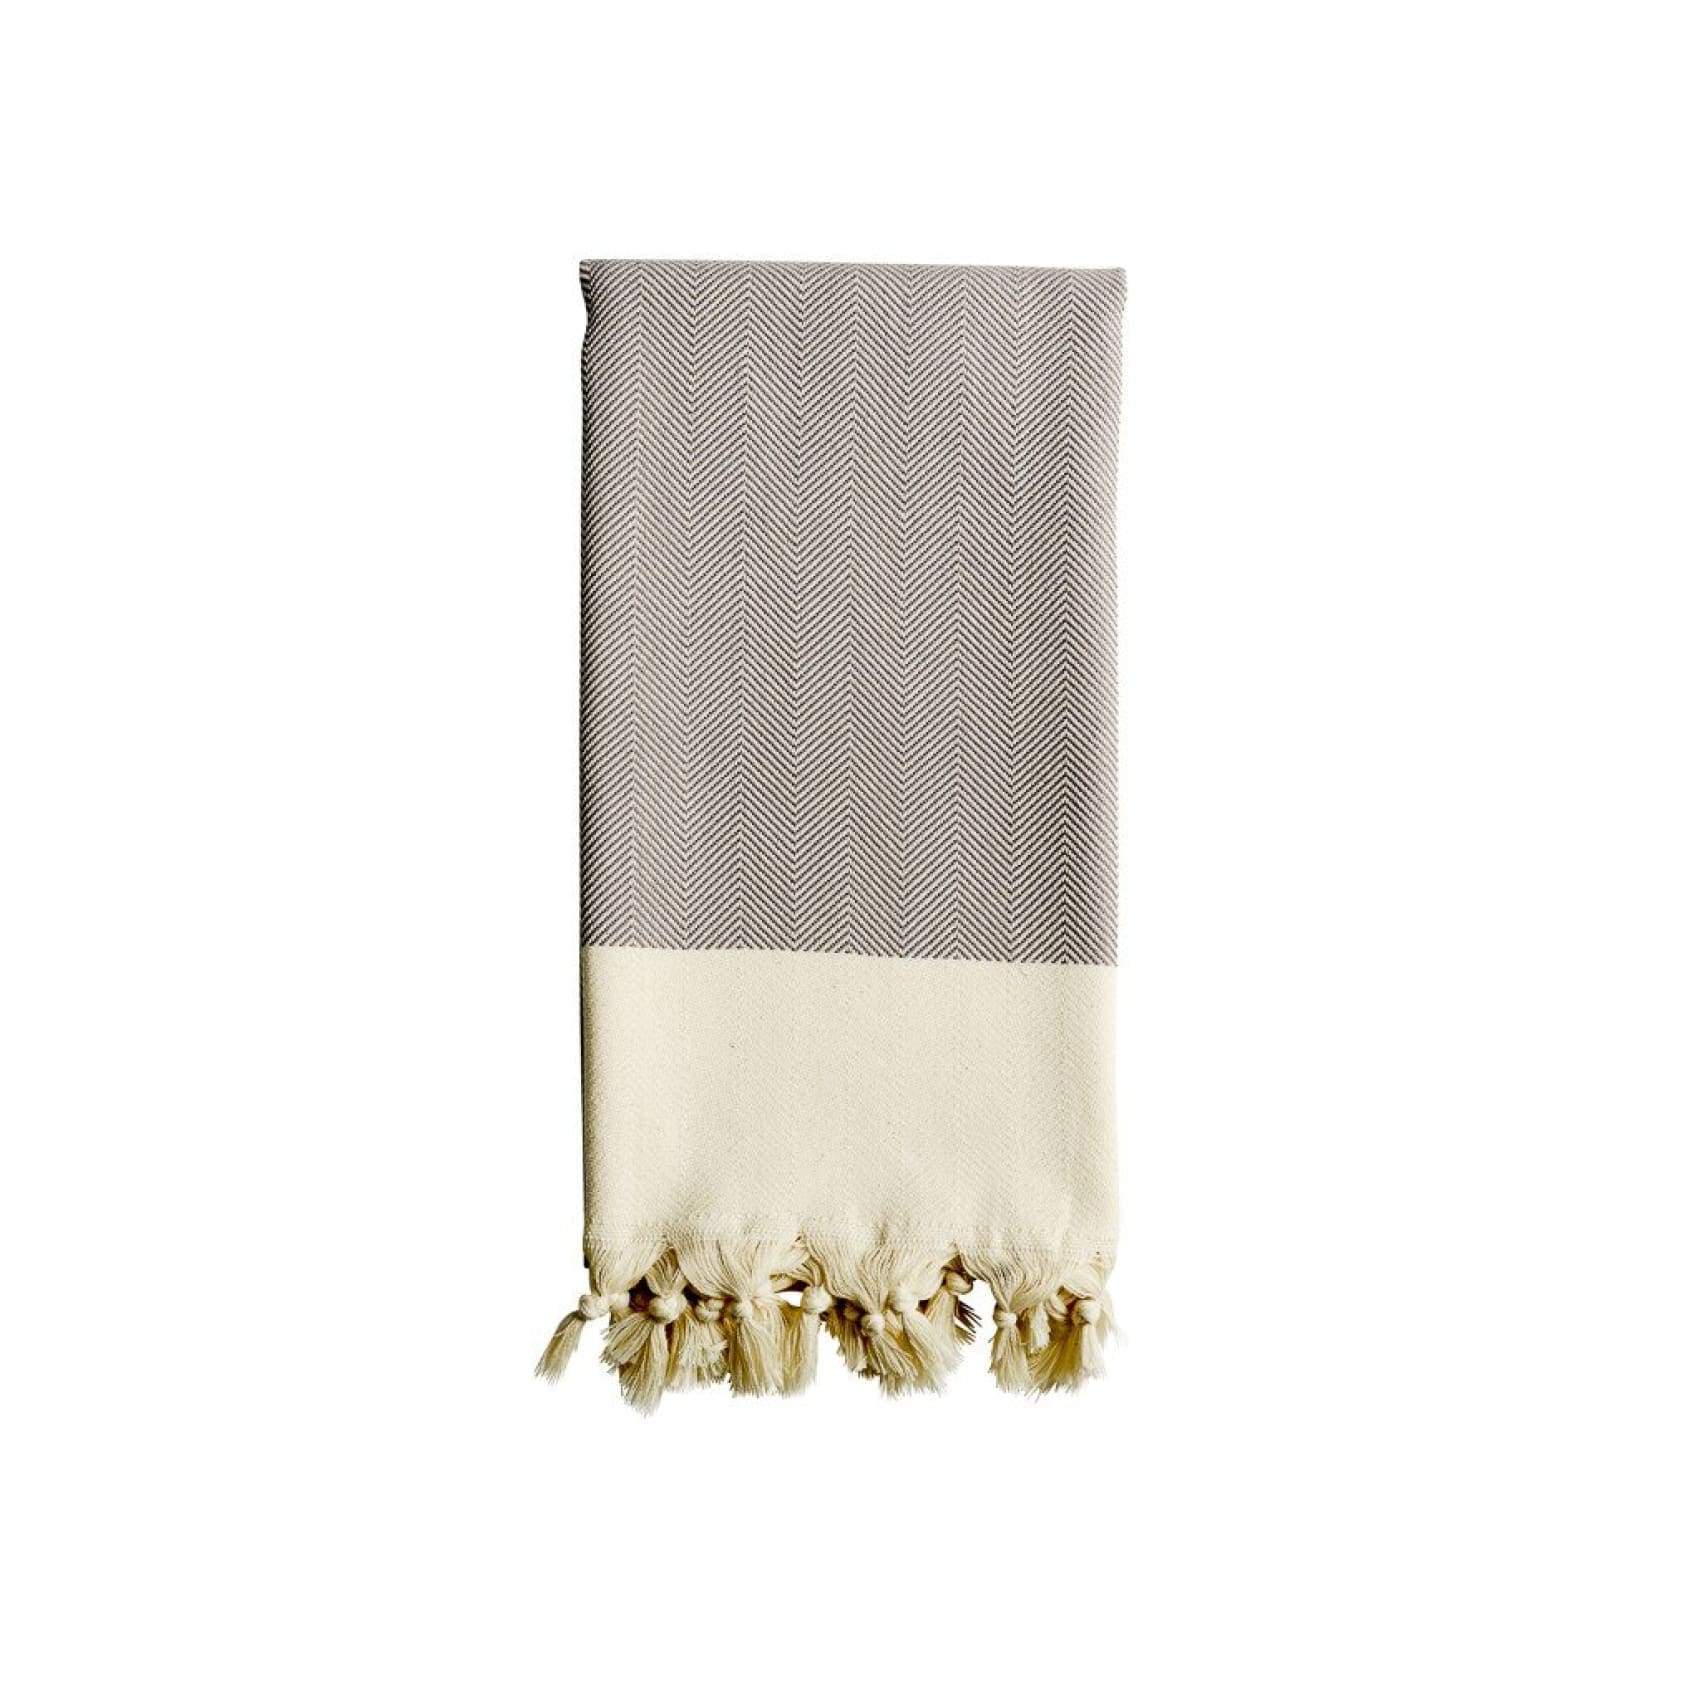 eren-peshtemal-slate-cotton-grey-orange-scarf-towels-luks-linen-linens-towel-beige-245.jpg